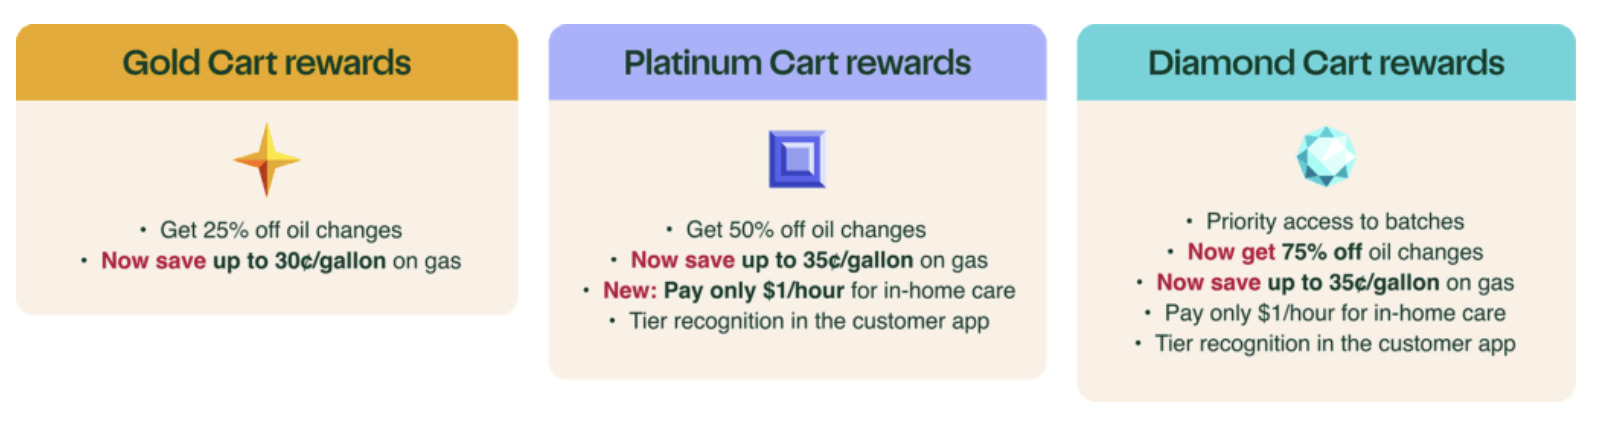 Cart Star Rewards Program